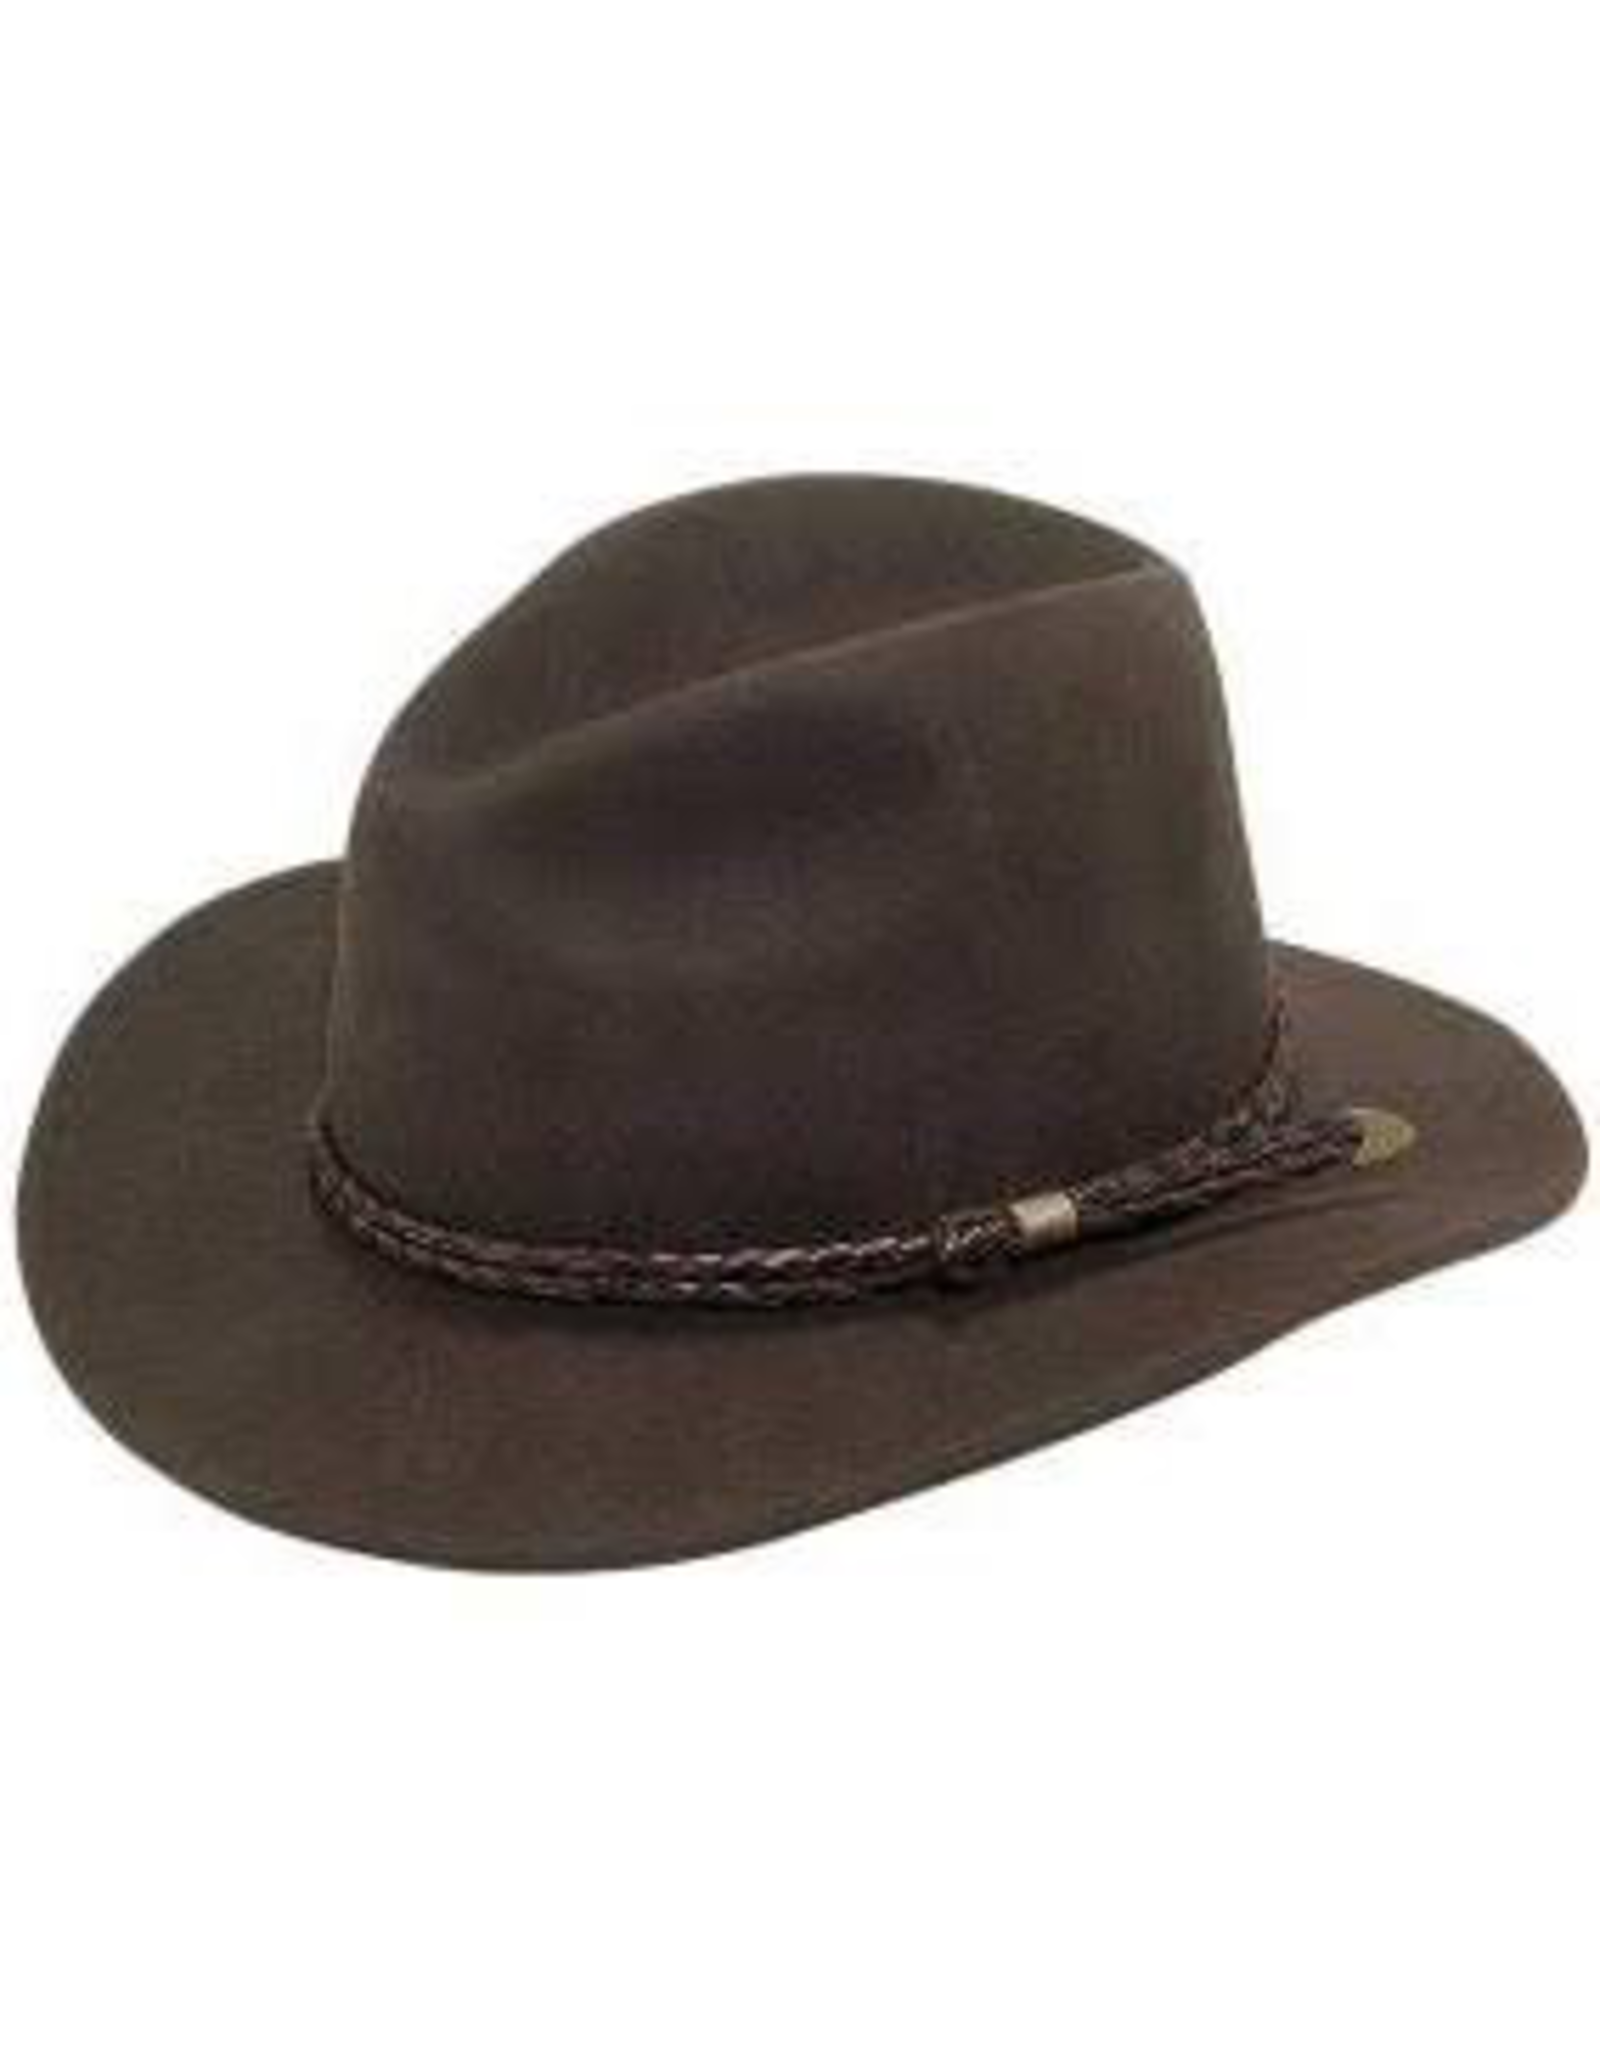 Hats Twister 72114-01/02 Omaha Crushable